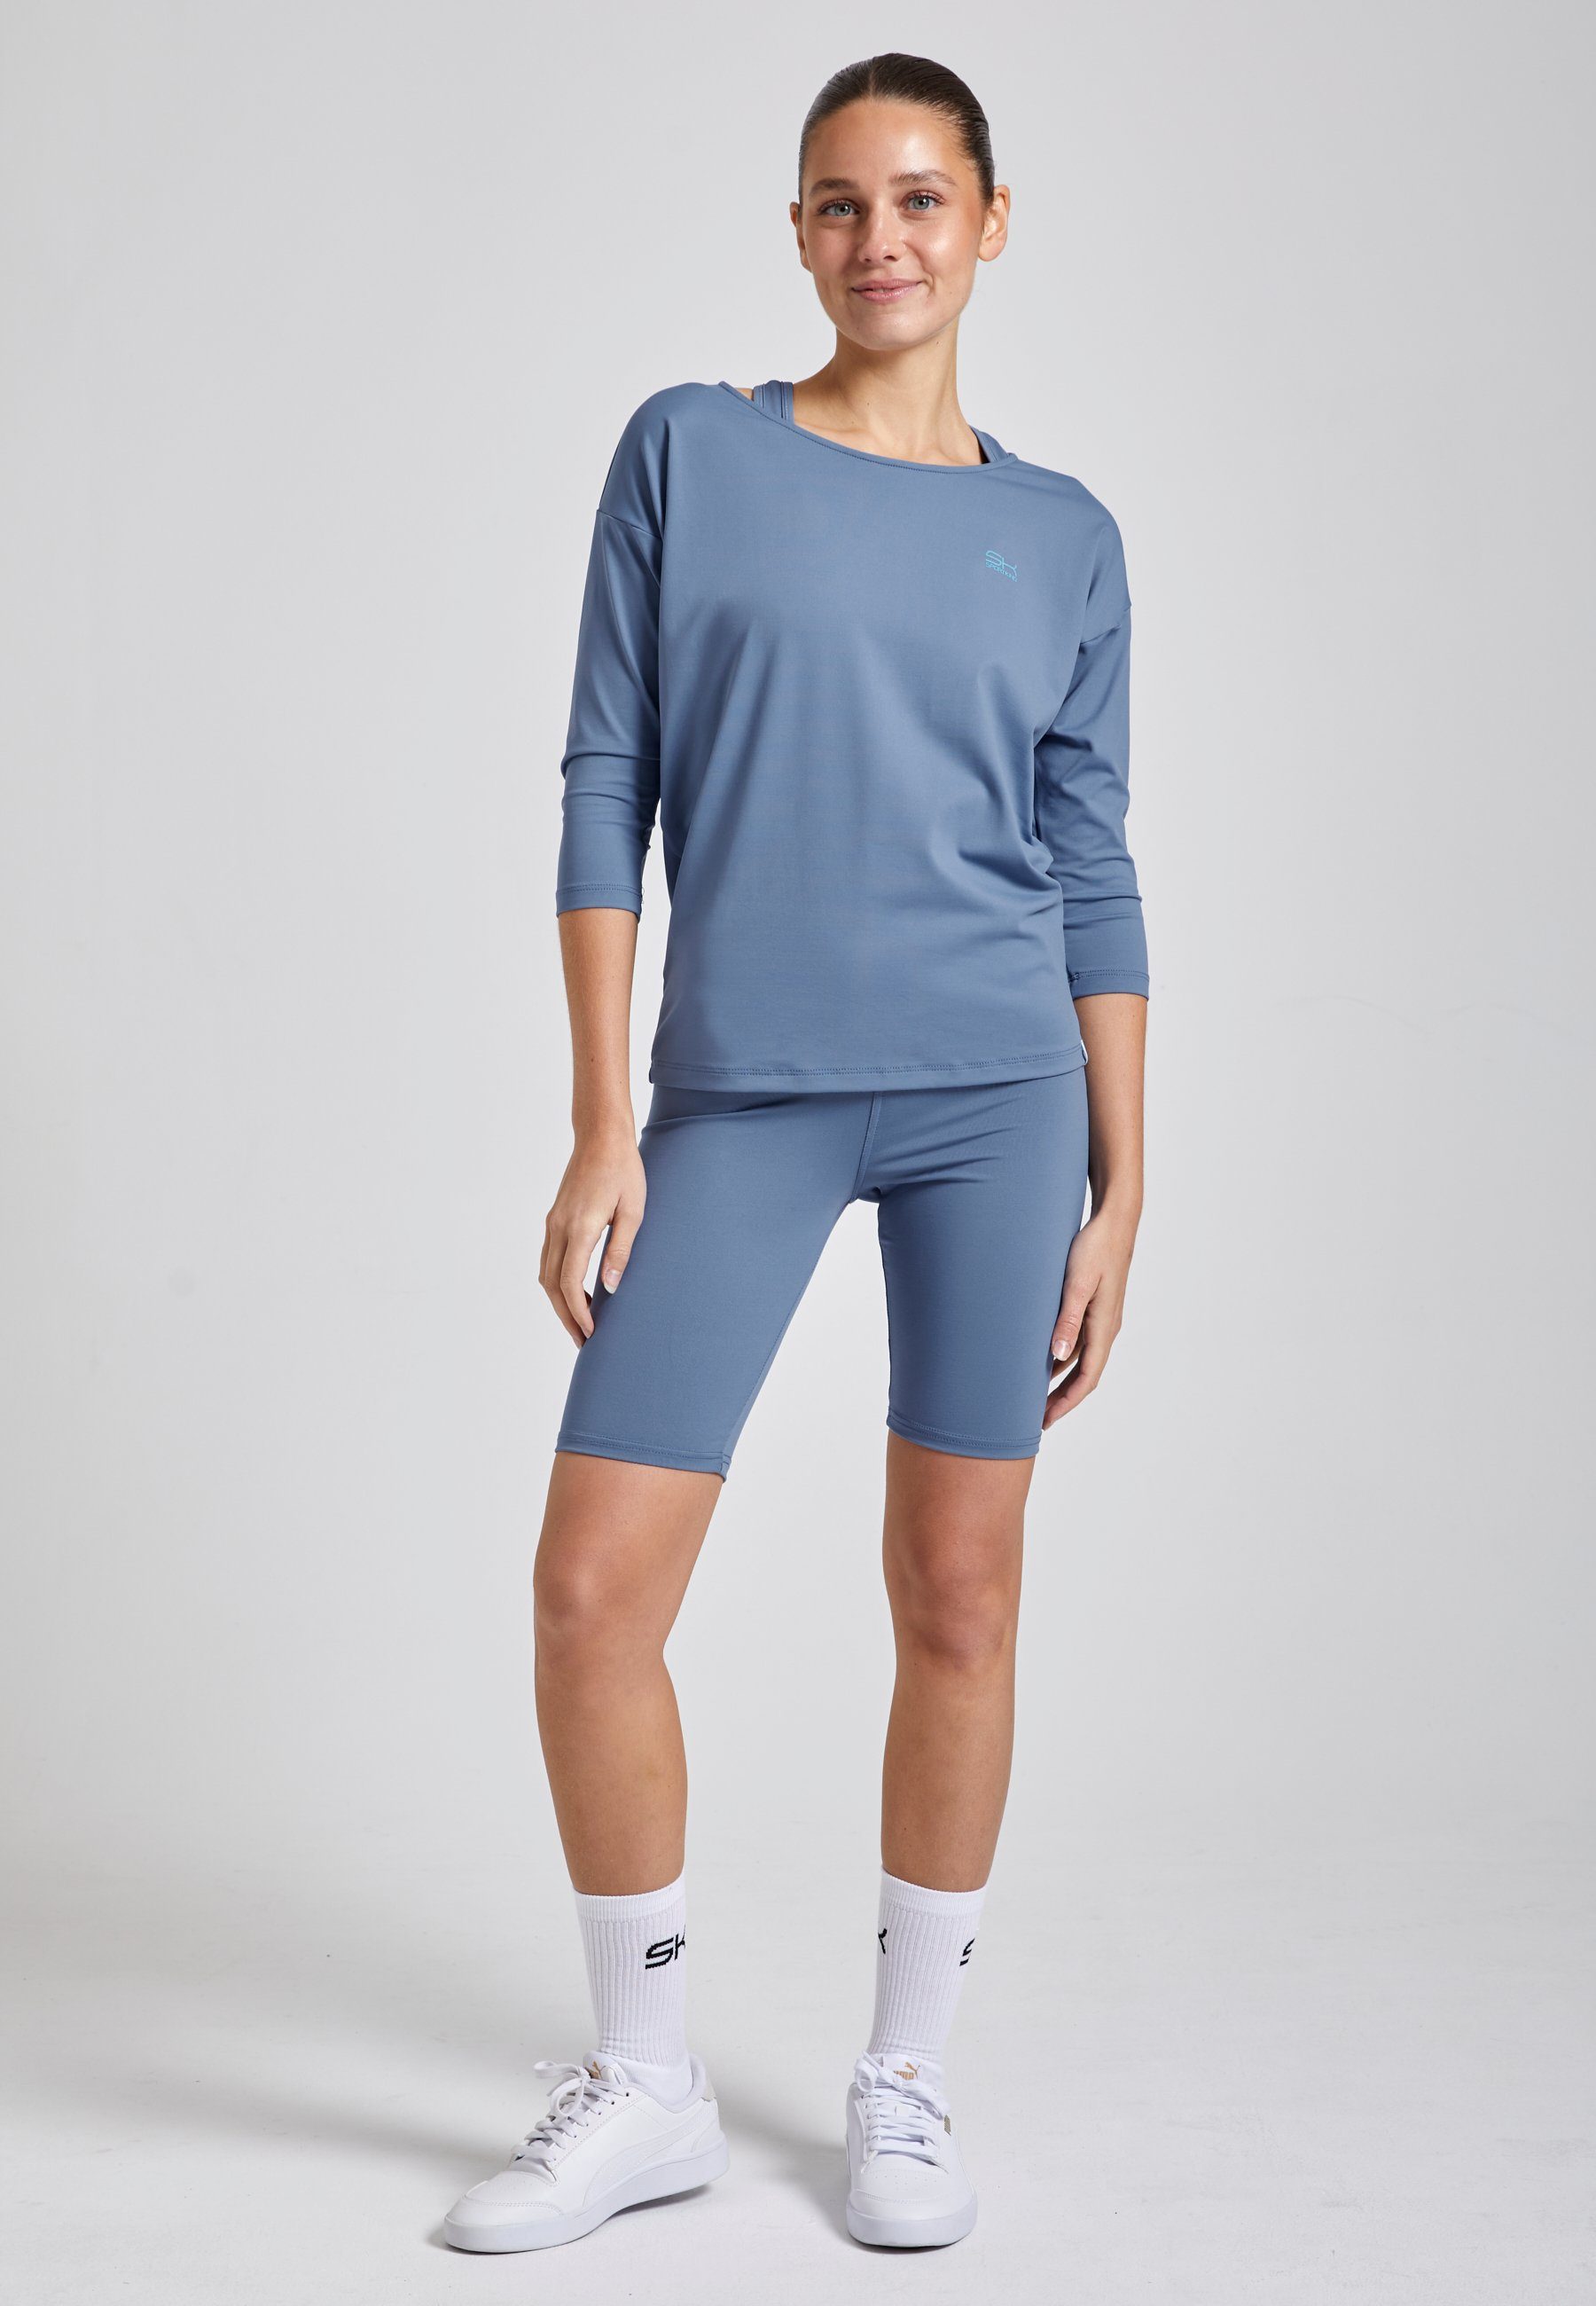 SPORTKIND Mädchen 3/4 blau Fit & Funktionsshirt Loose Damen Tennis Shirt grau